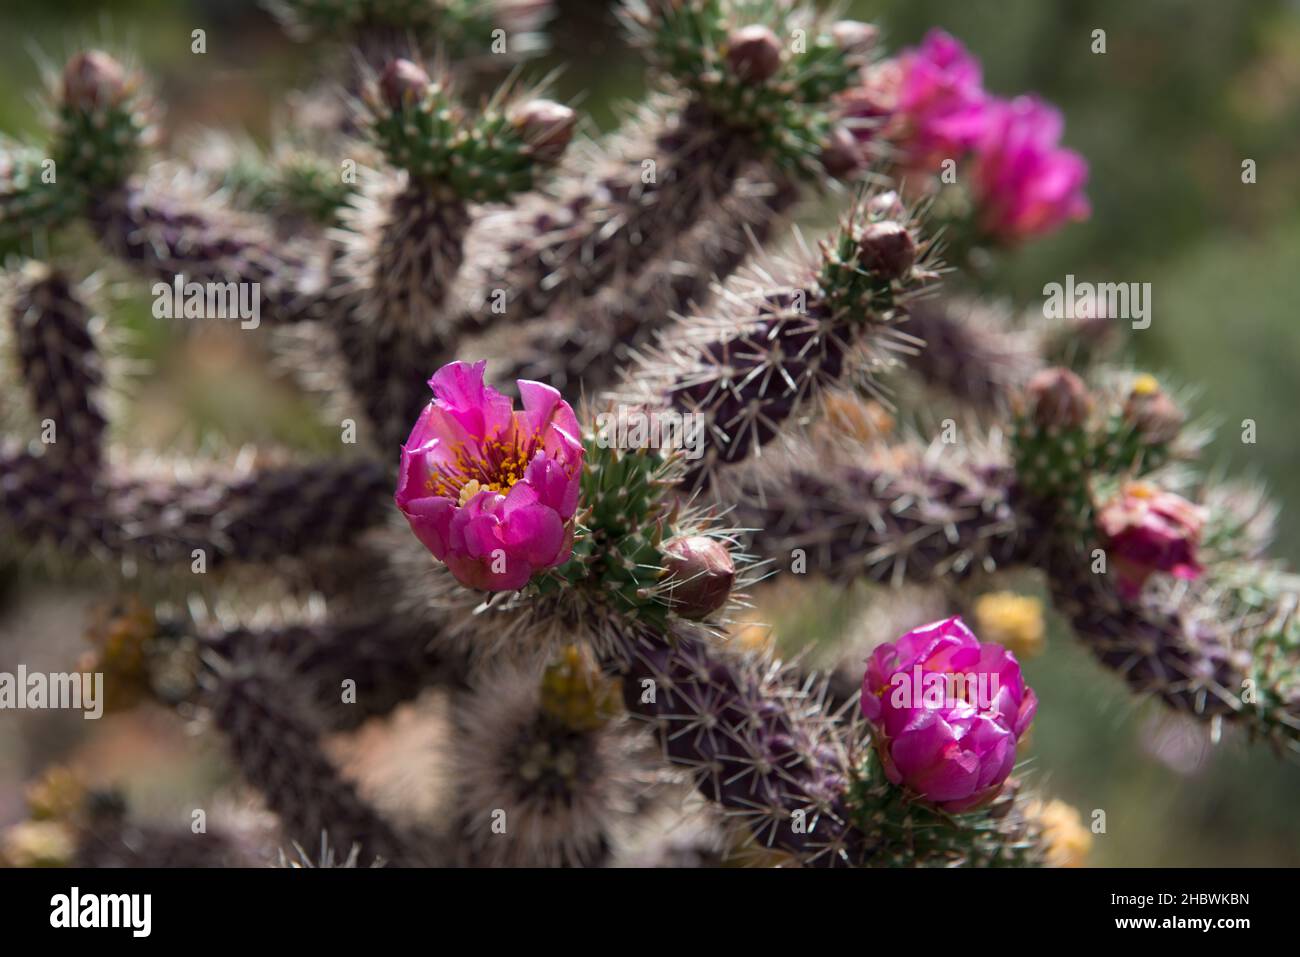 Red Cactus Flowers Stock Photo